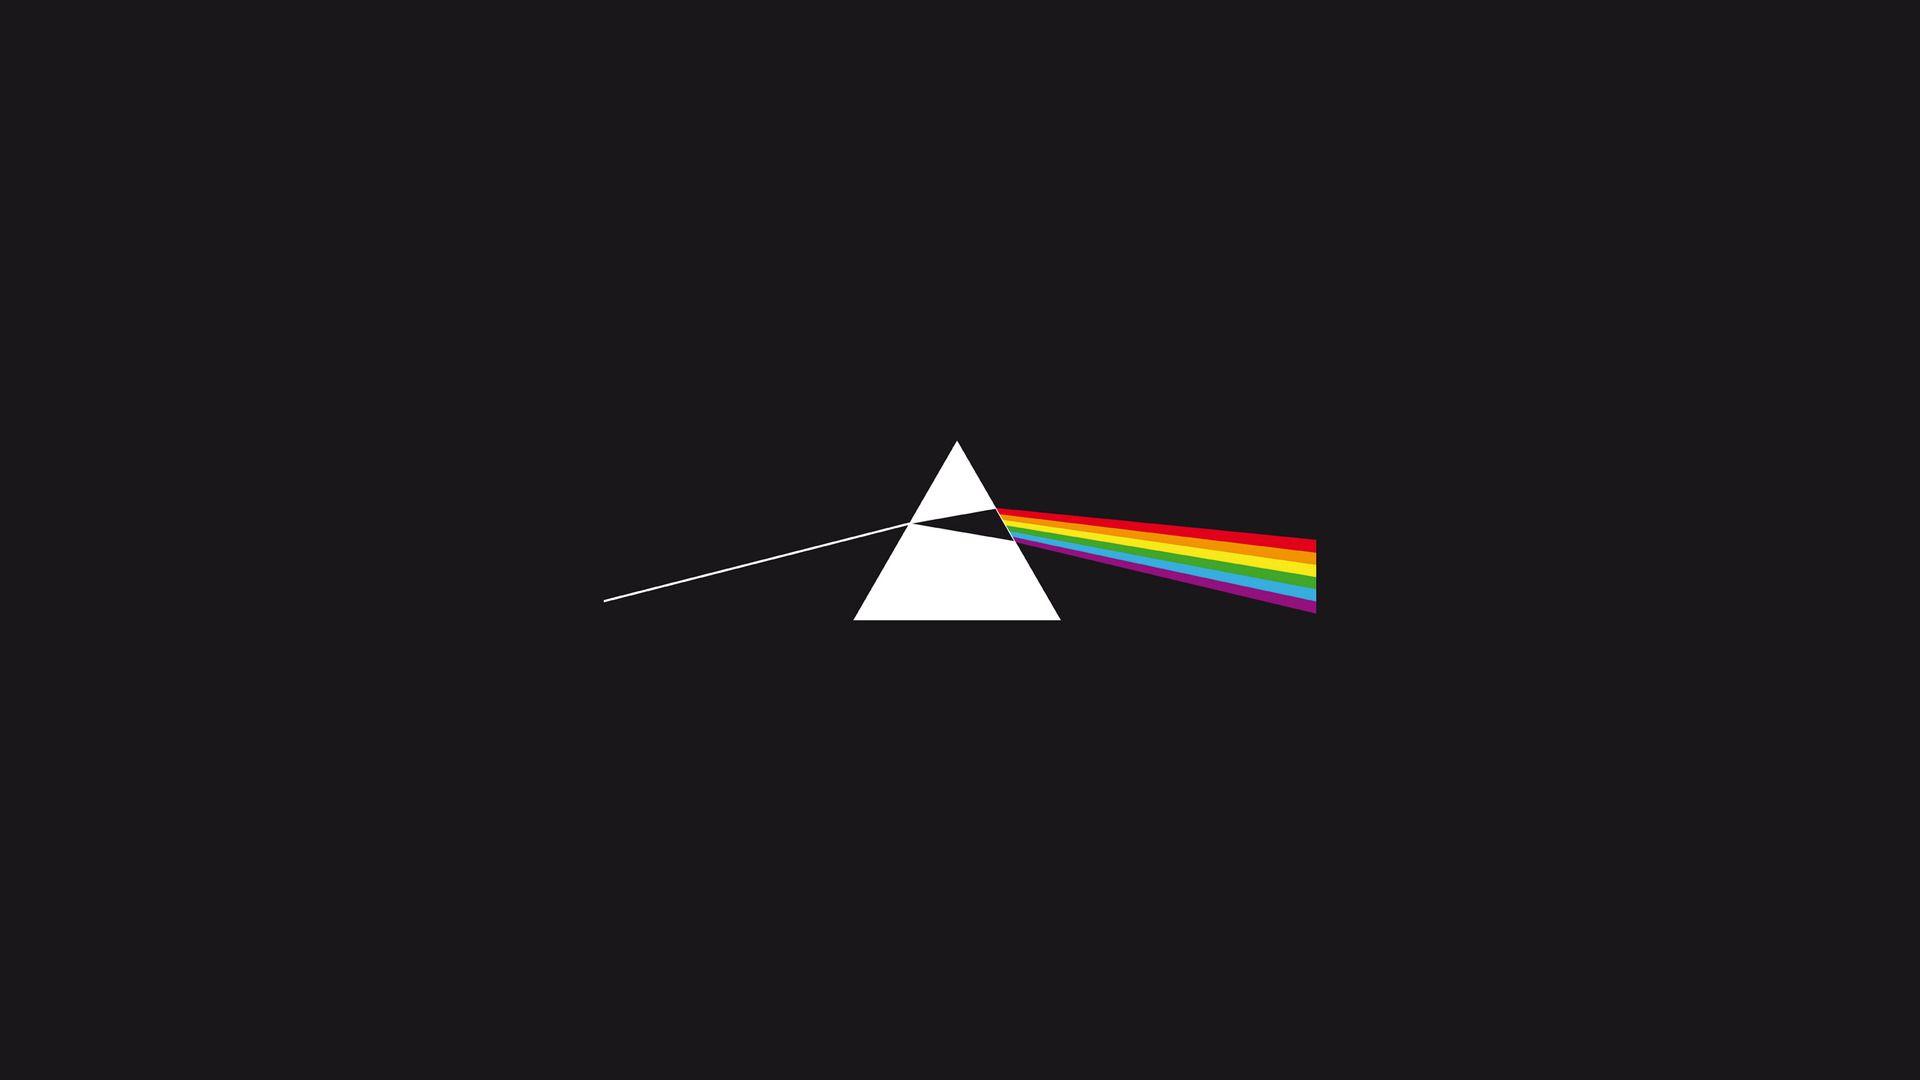 Prism Rainbow Pink Floyd Flat Minimal Illustration Desktop Wallpaper